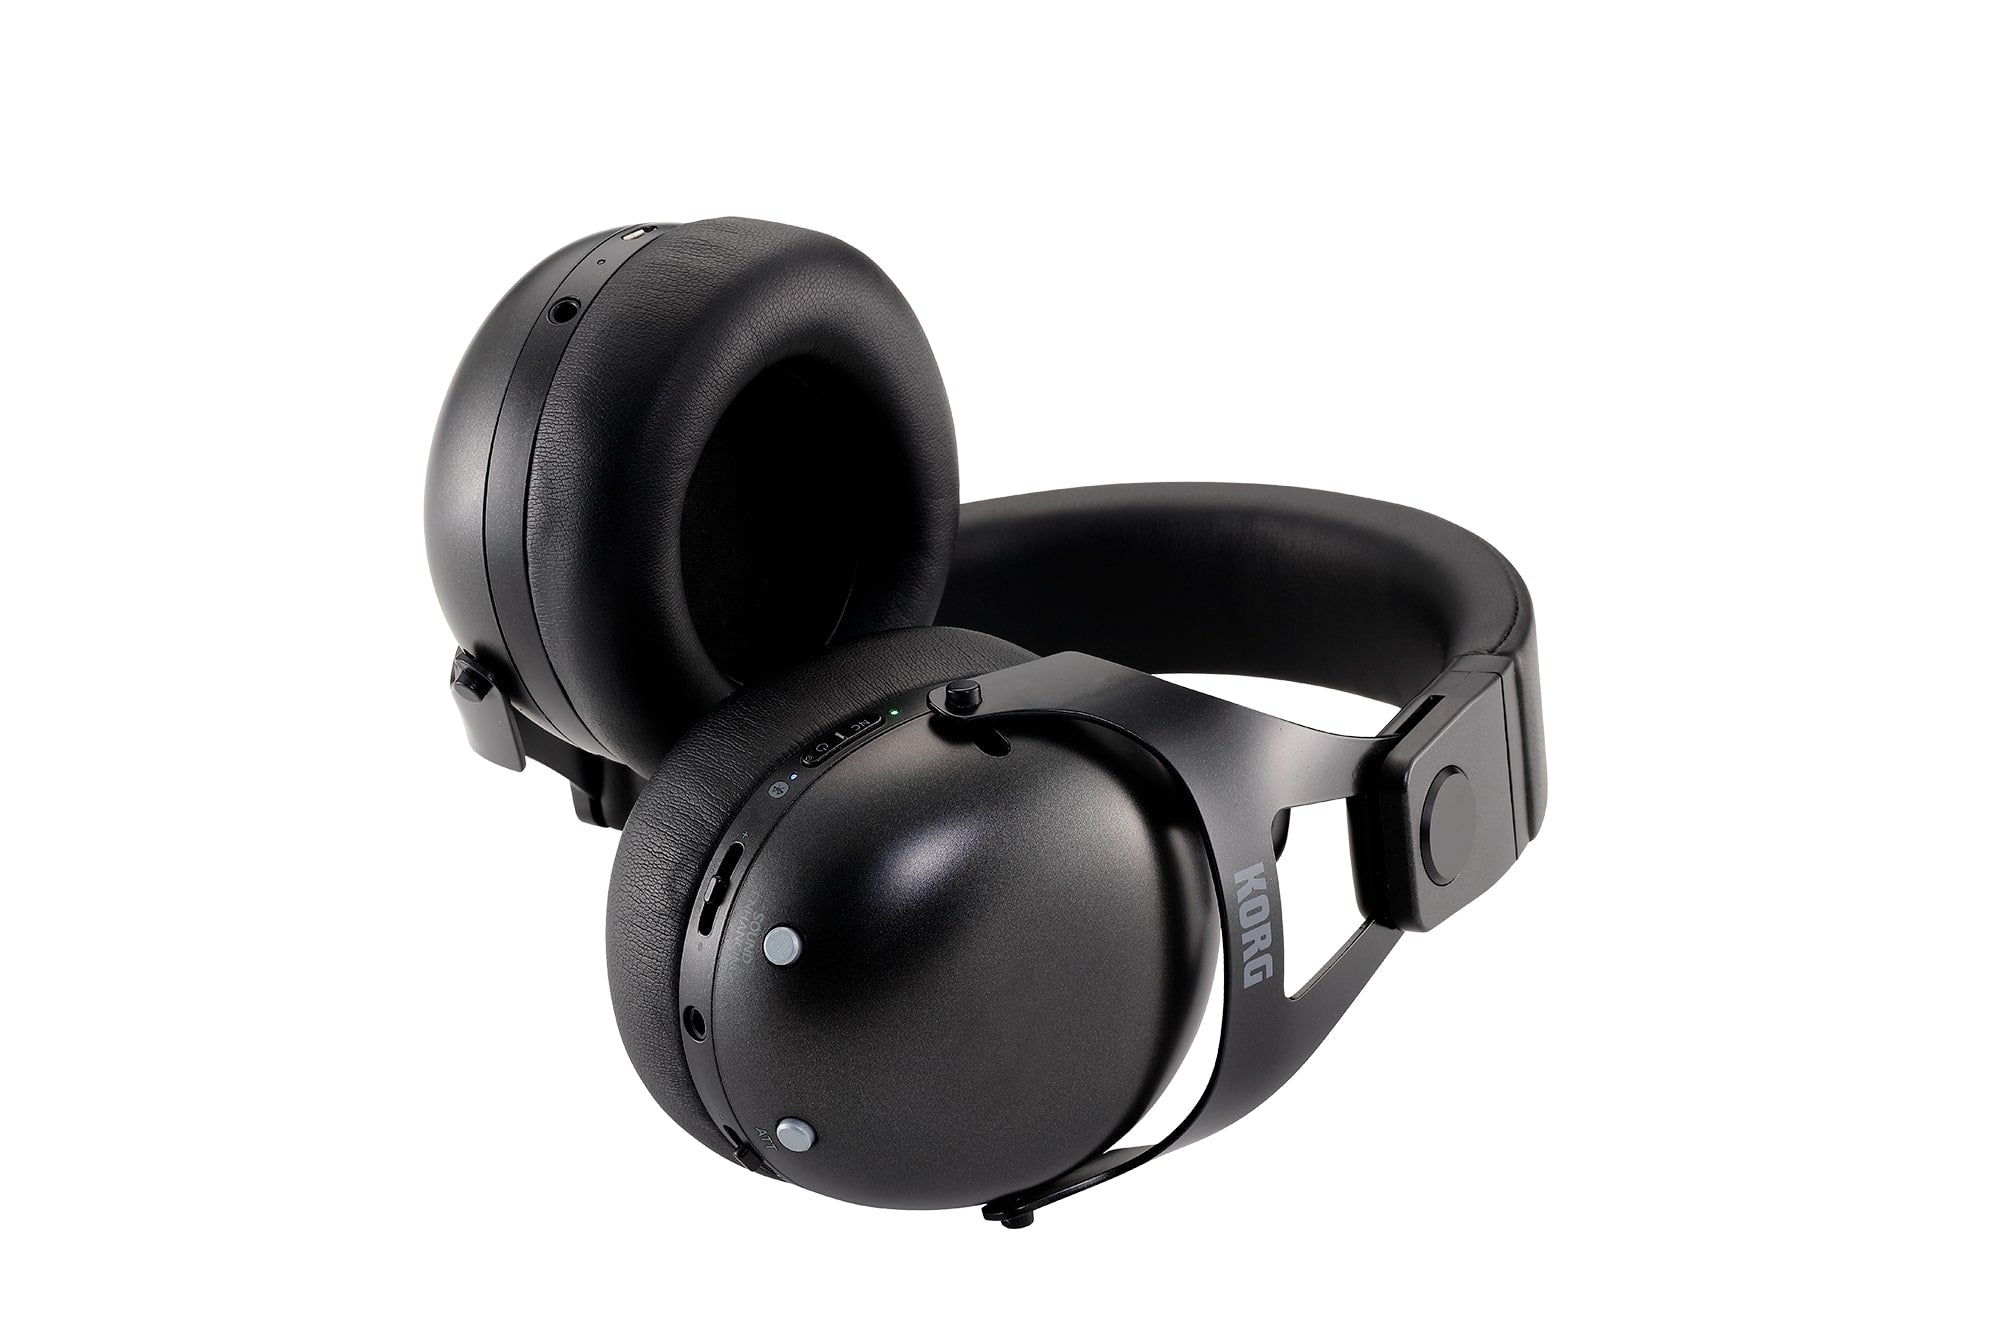 Korg Smart Noise Cancelling DJ Headphones Black NCQ1BK